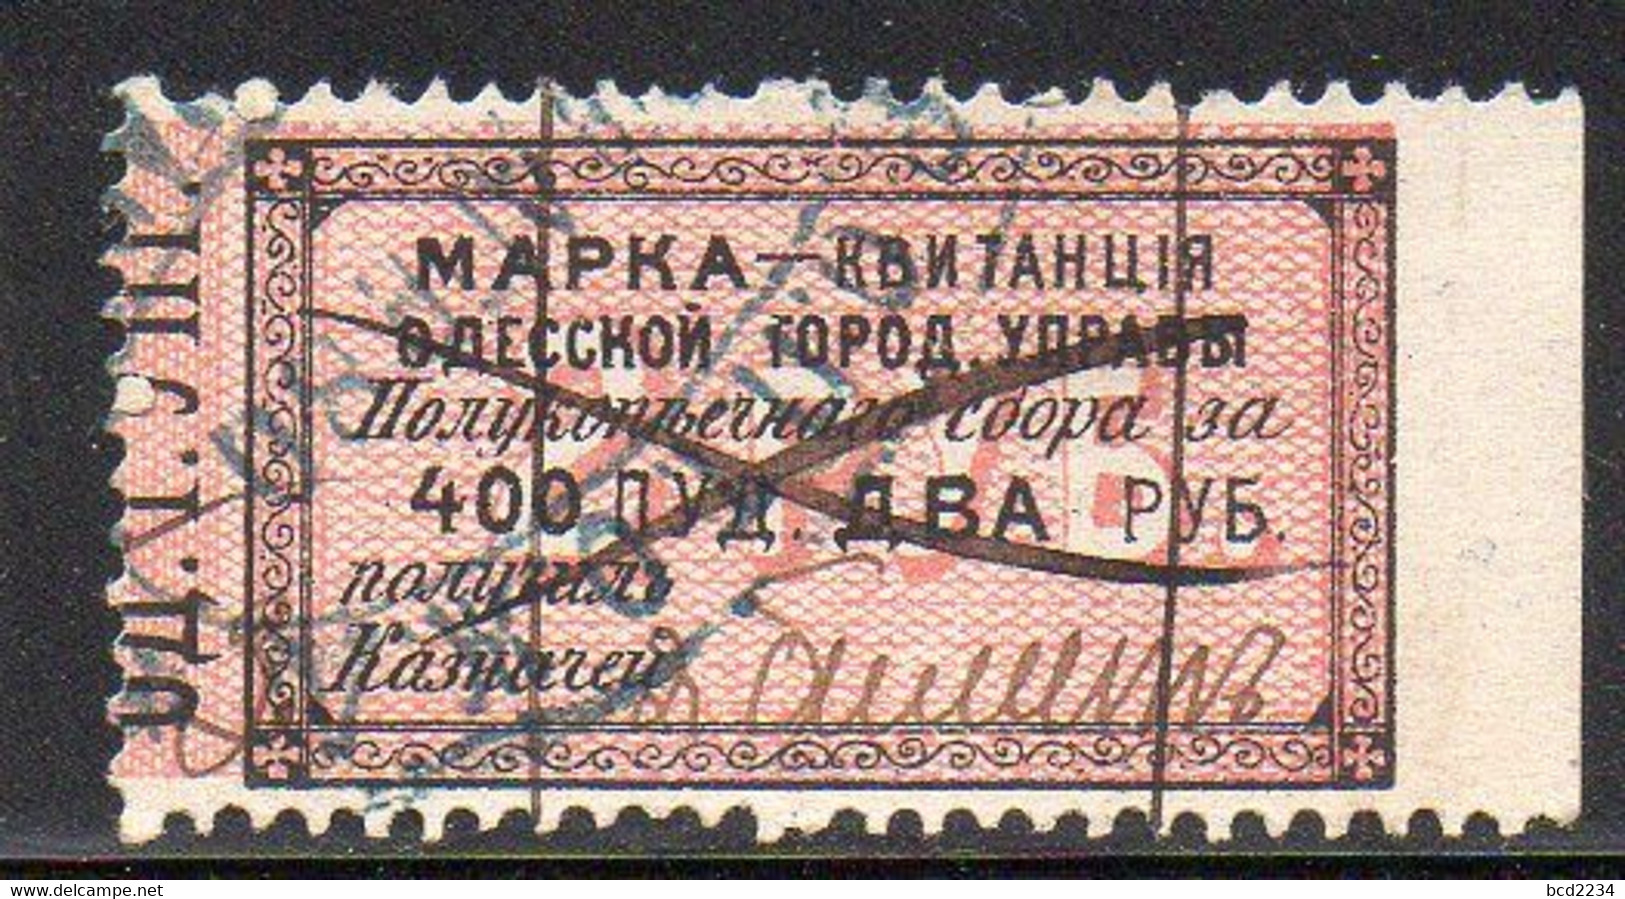 RUSSIA UKRAINE ODESSA MUNICIPAL REVENUE 1879 2R (400) BLACK & PINK BAREFOOT #23 BORDER WITH SCROLLS MARGIN RIGHT FISCAUX - Revenue Stamps